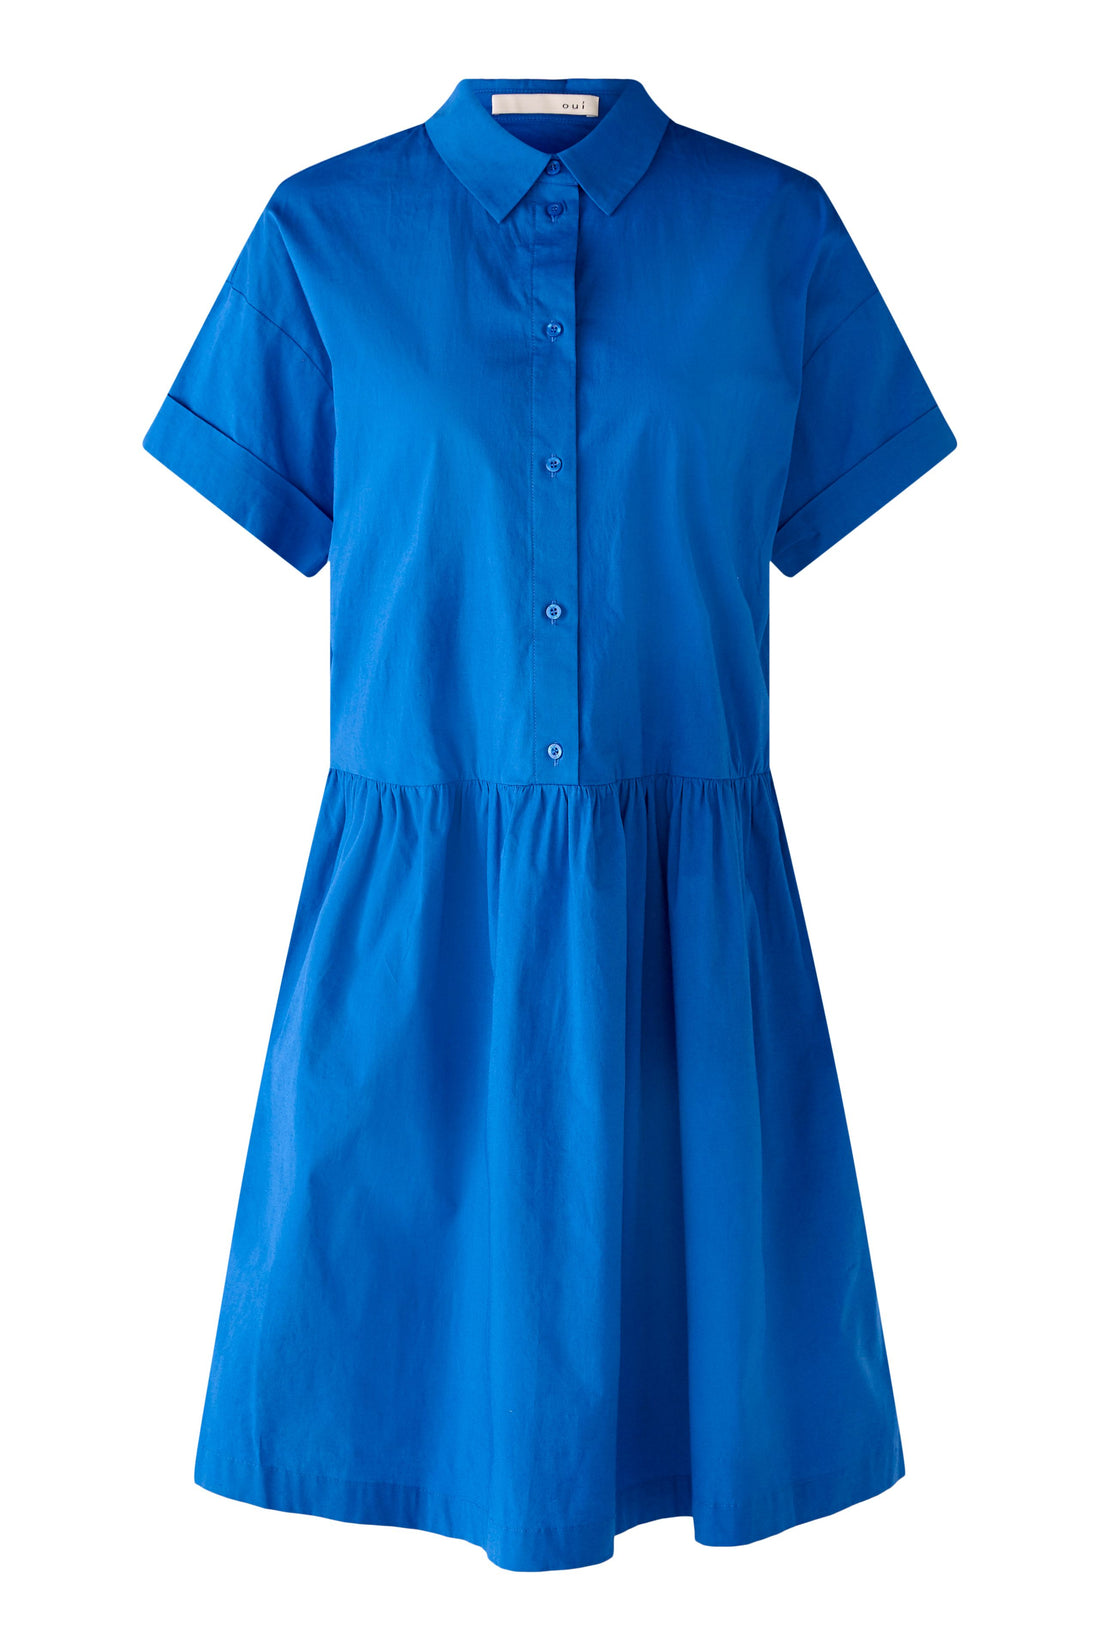 Blue Short Dress In Cotton Blend